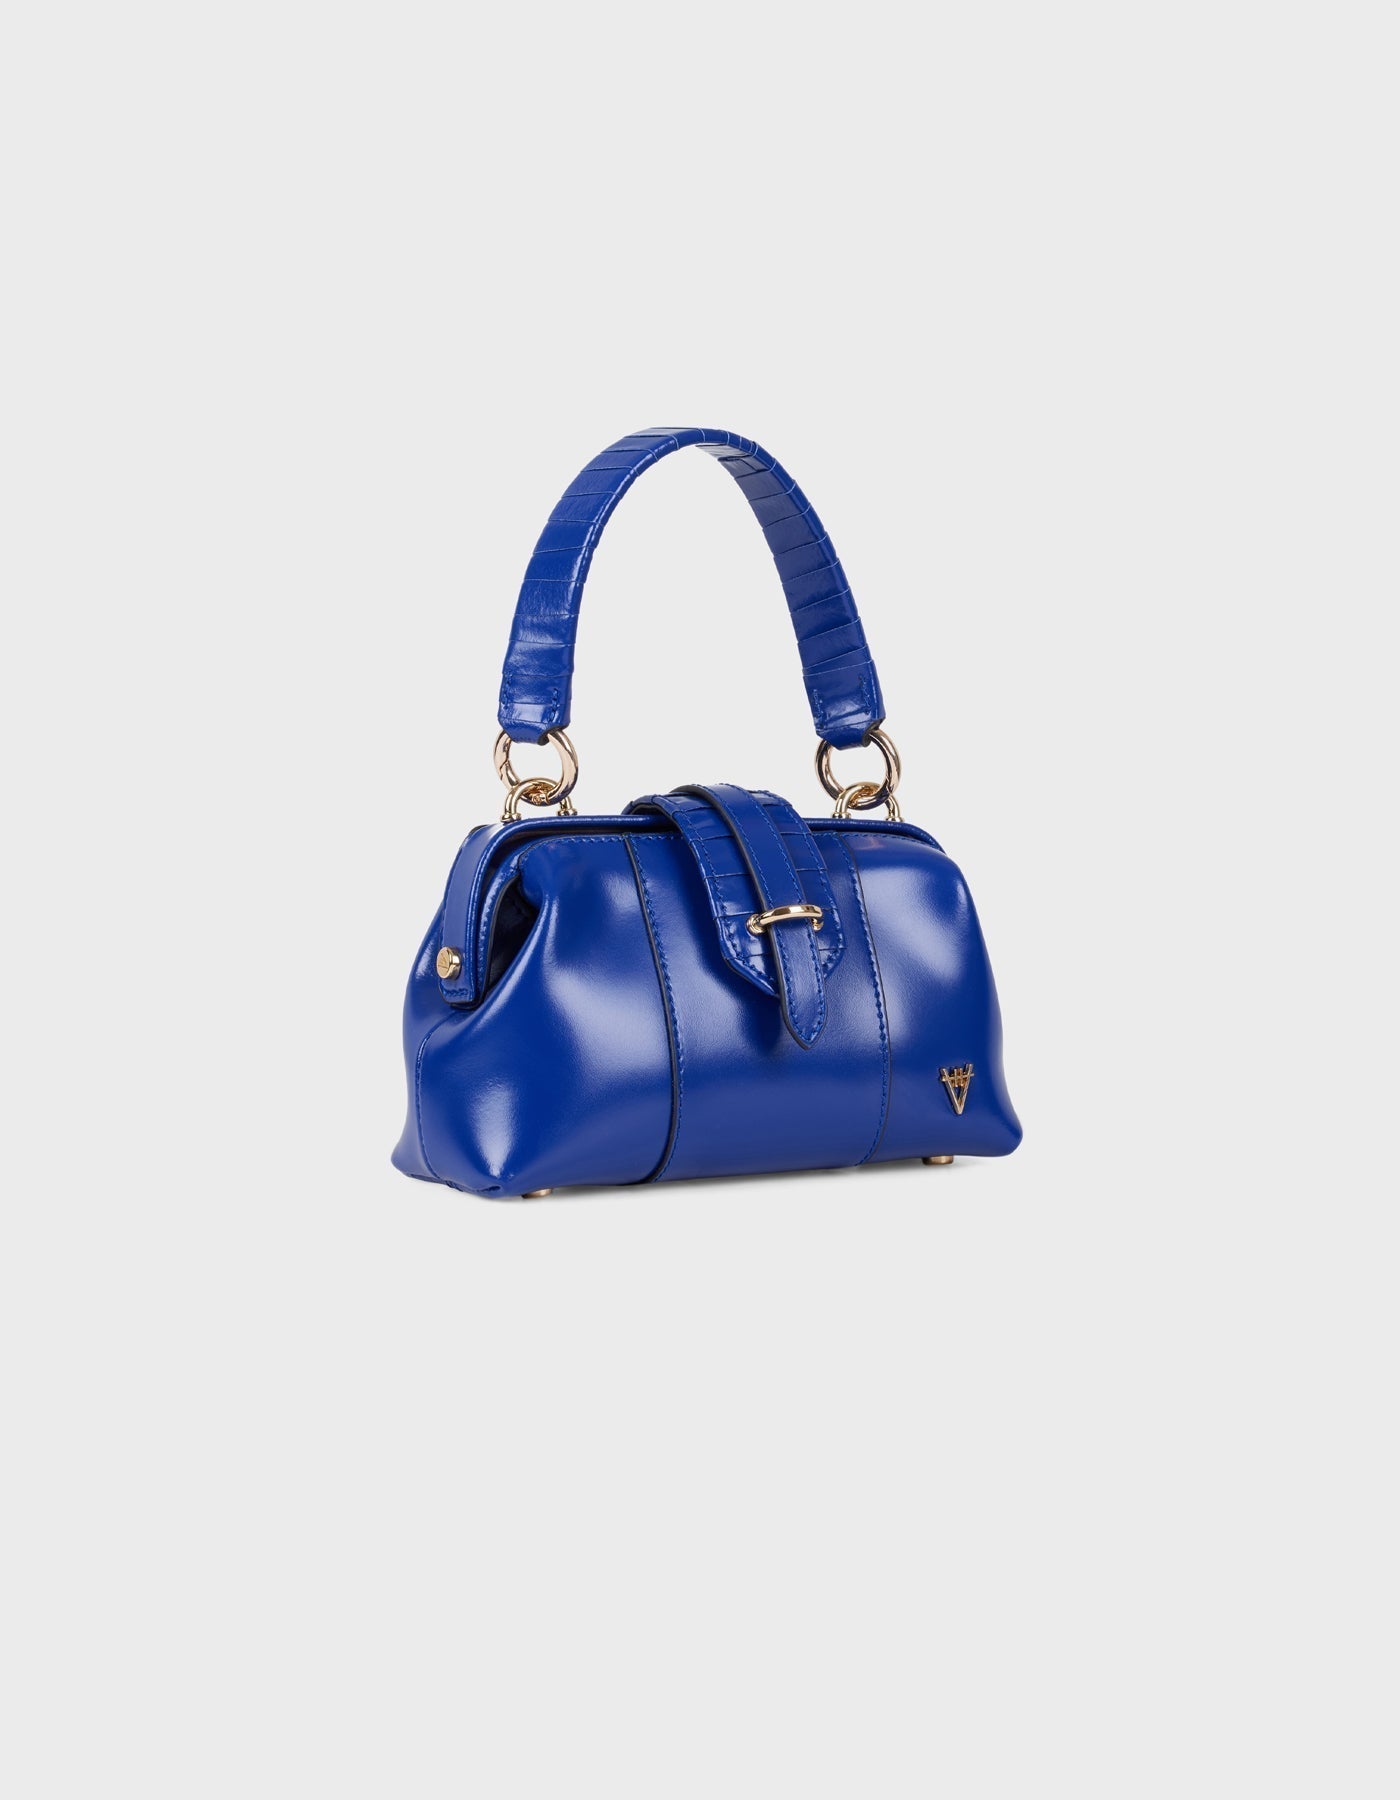 HiVa Atelier | Mini Nubes Doctor Bag Sodalite Blue | Beautiful and Versatile